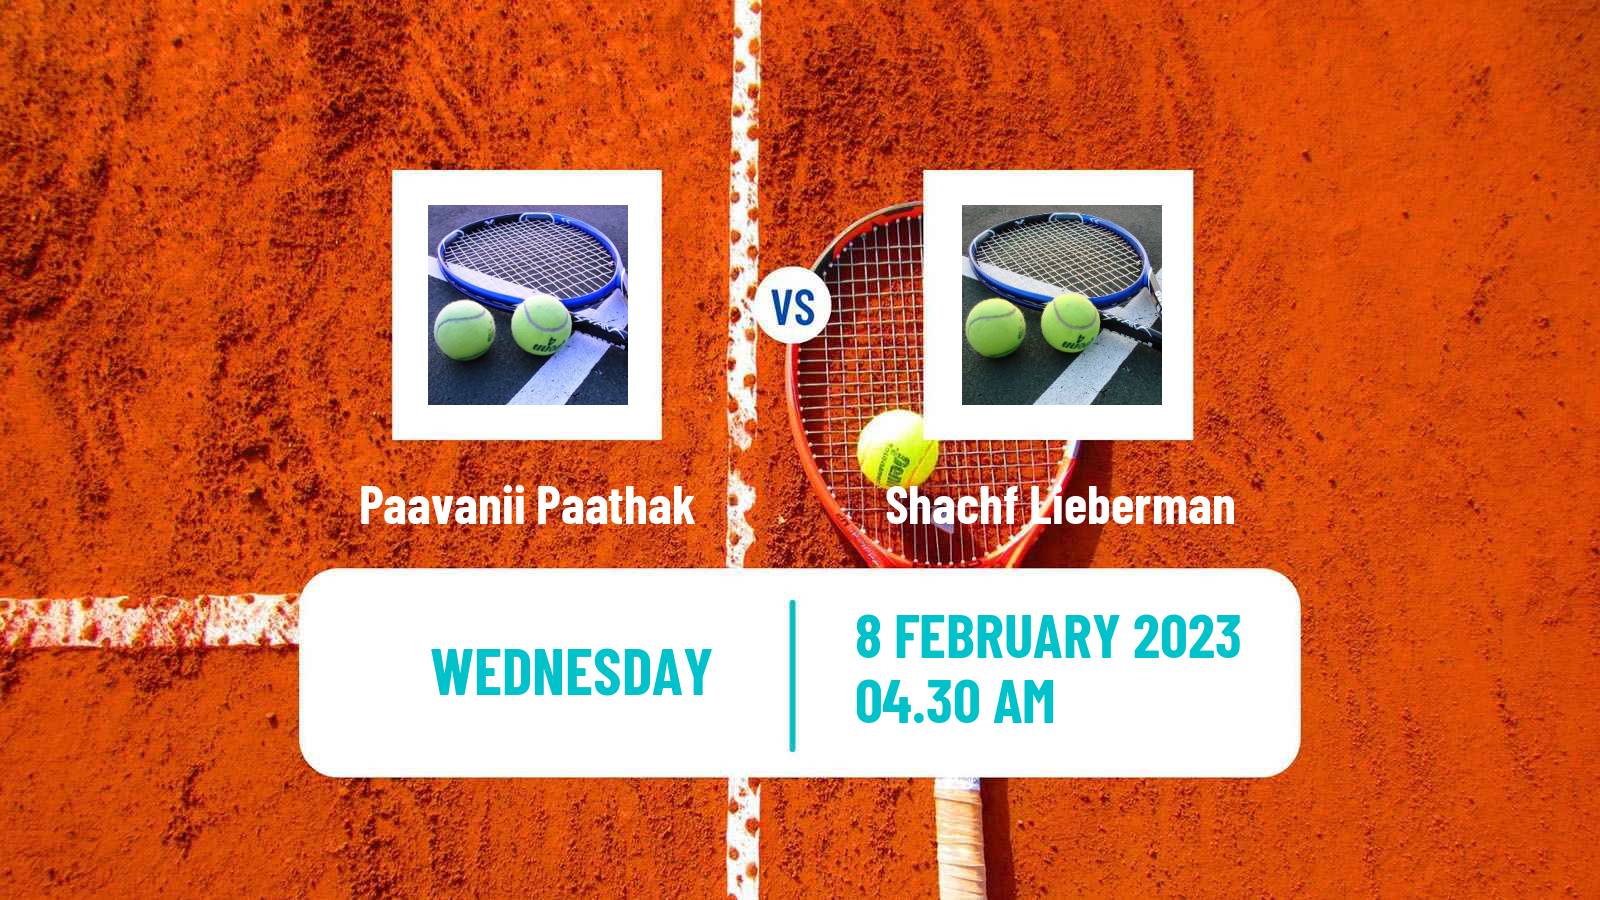 Tennis ITF Tournaments Paavanii Paathak - Shachf Lieberman